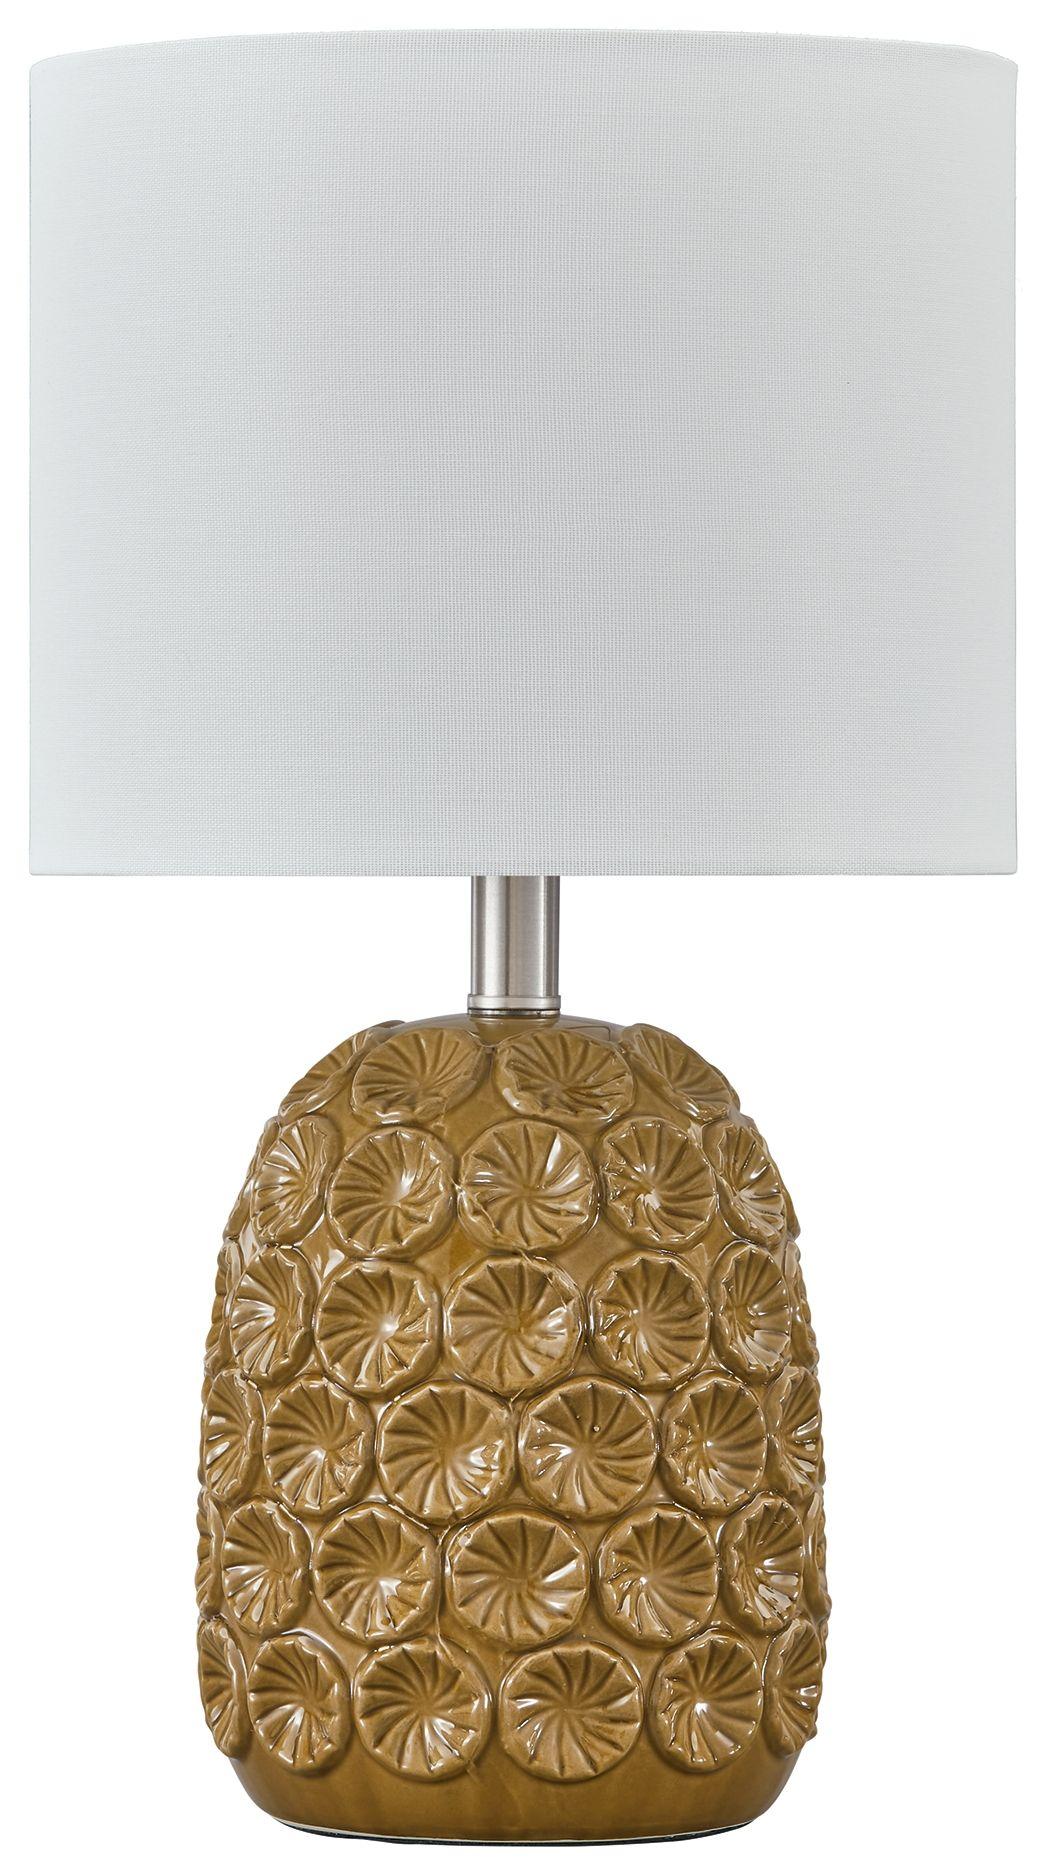 Moorbank - Ceramic Table Lamp (1/cn) image